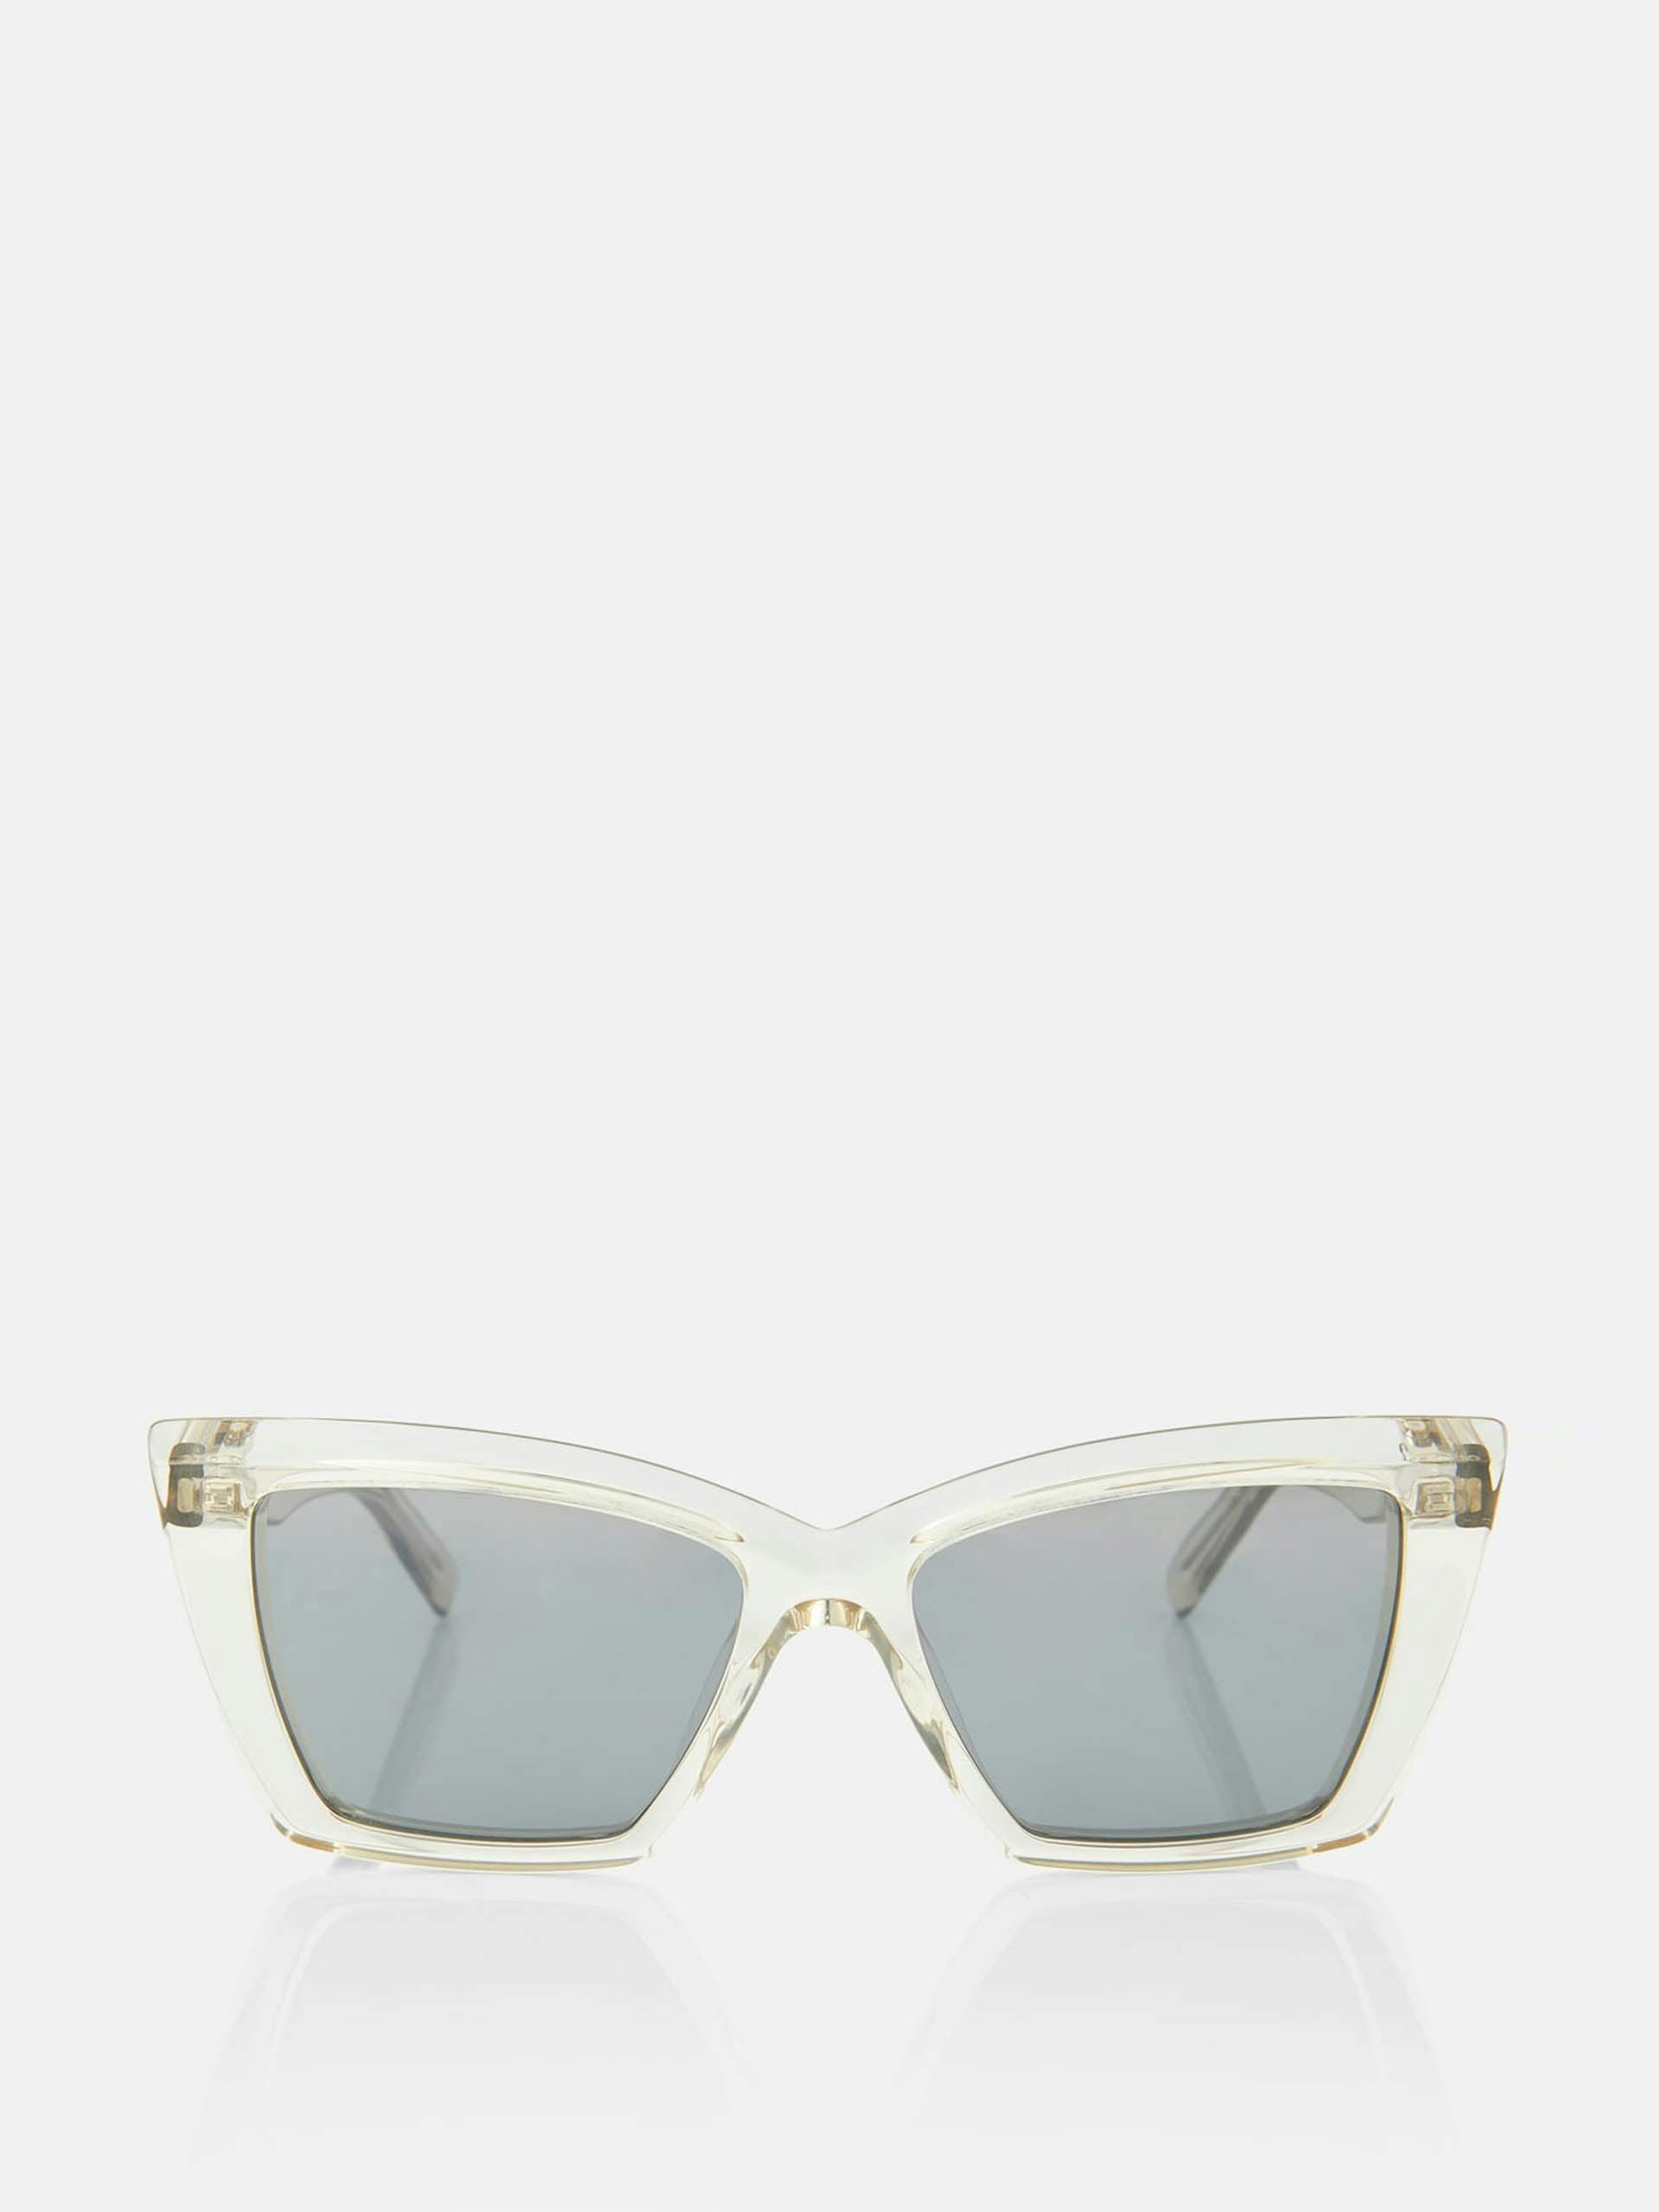 SL 657 square sunglasses